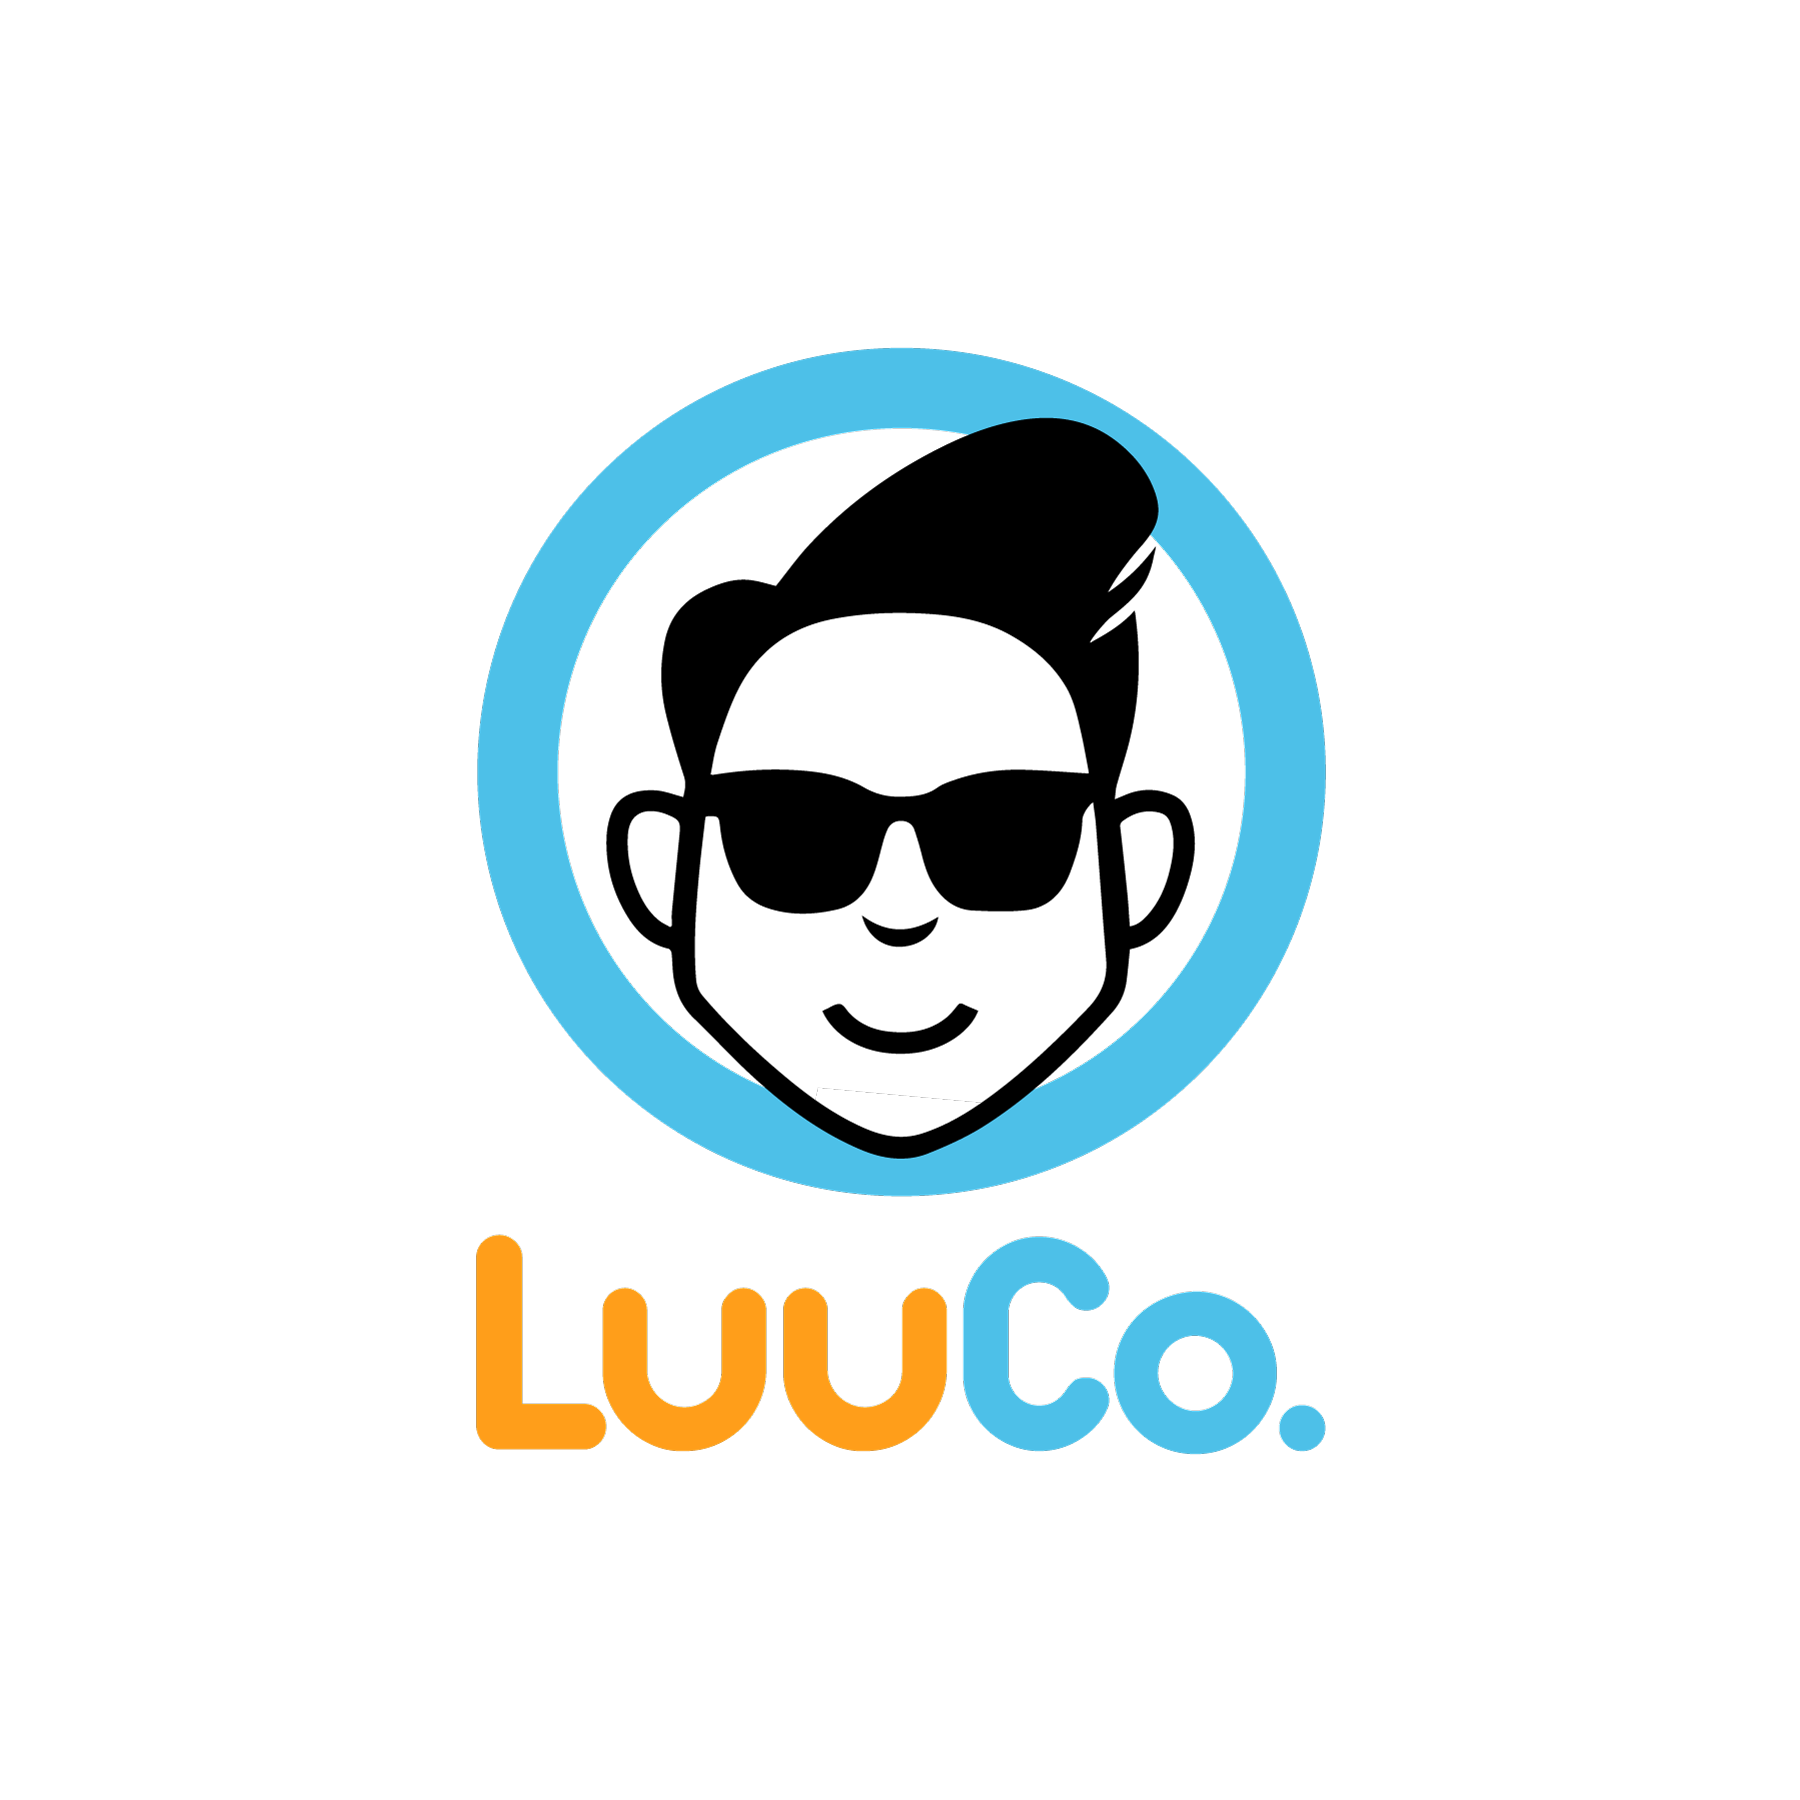 LuuCo. logo